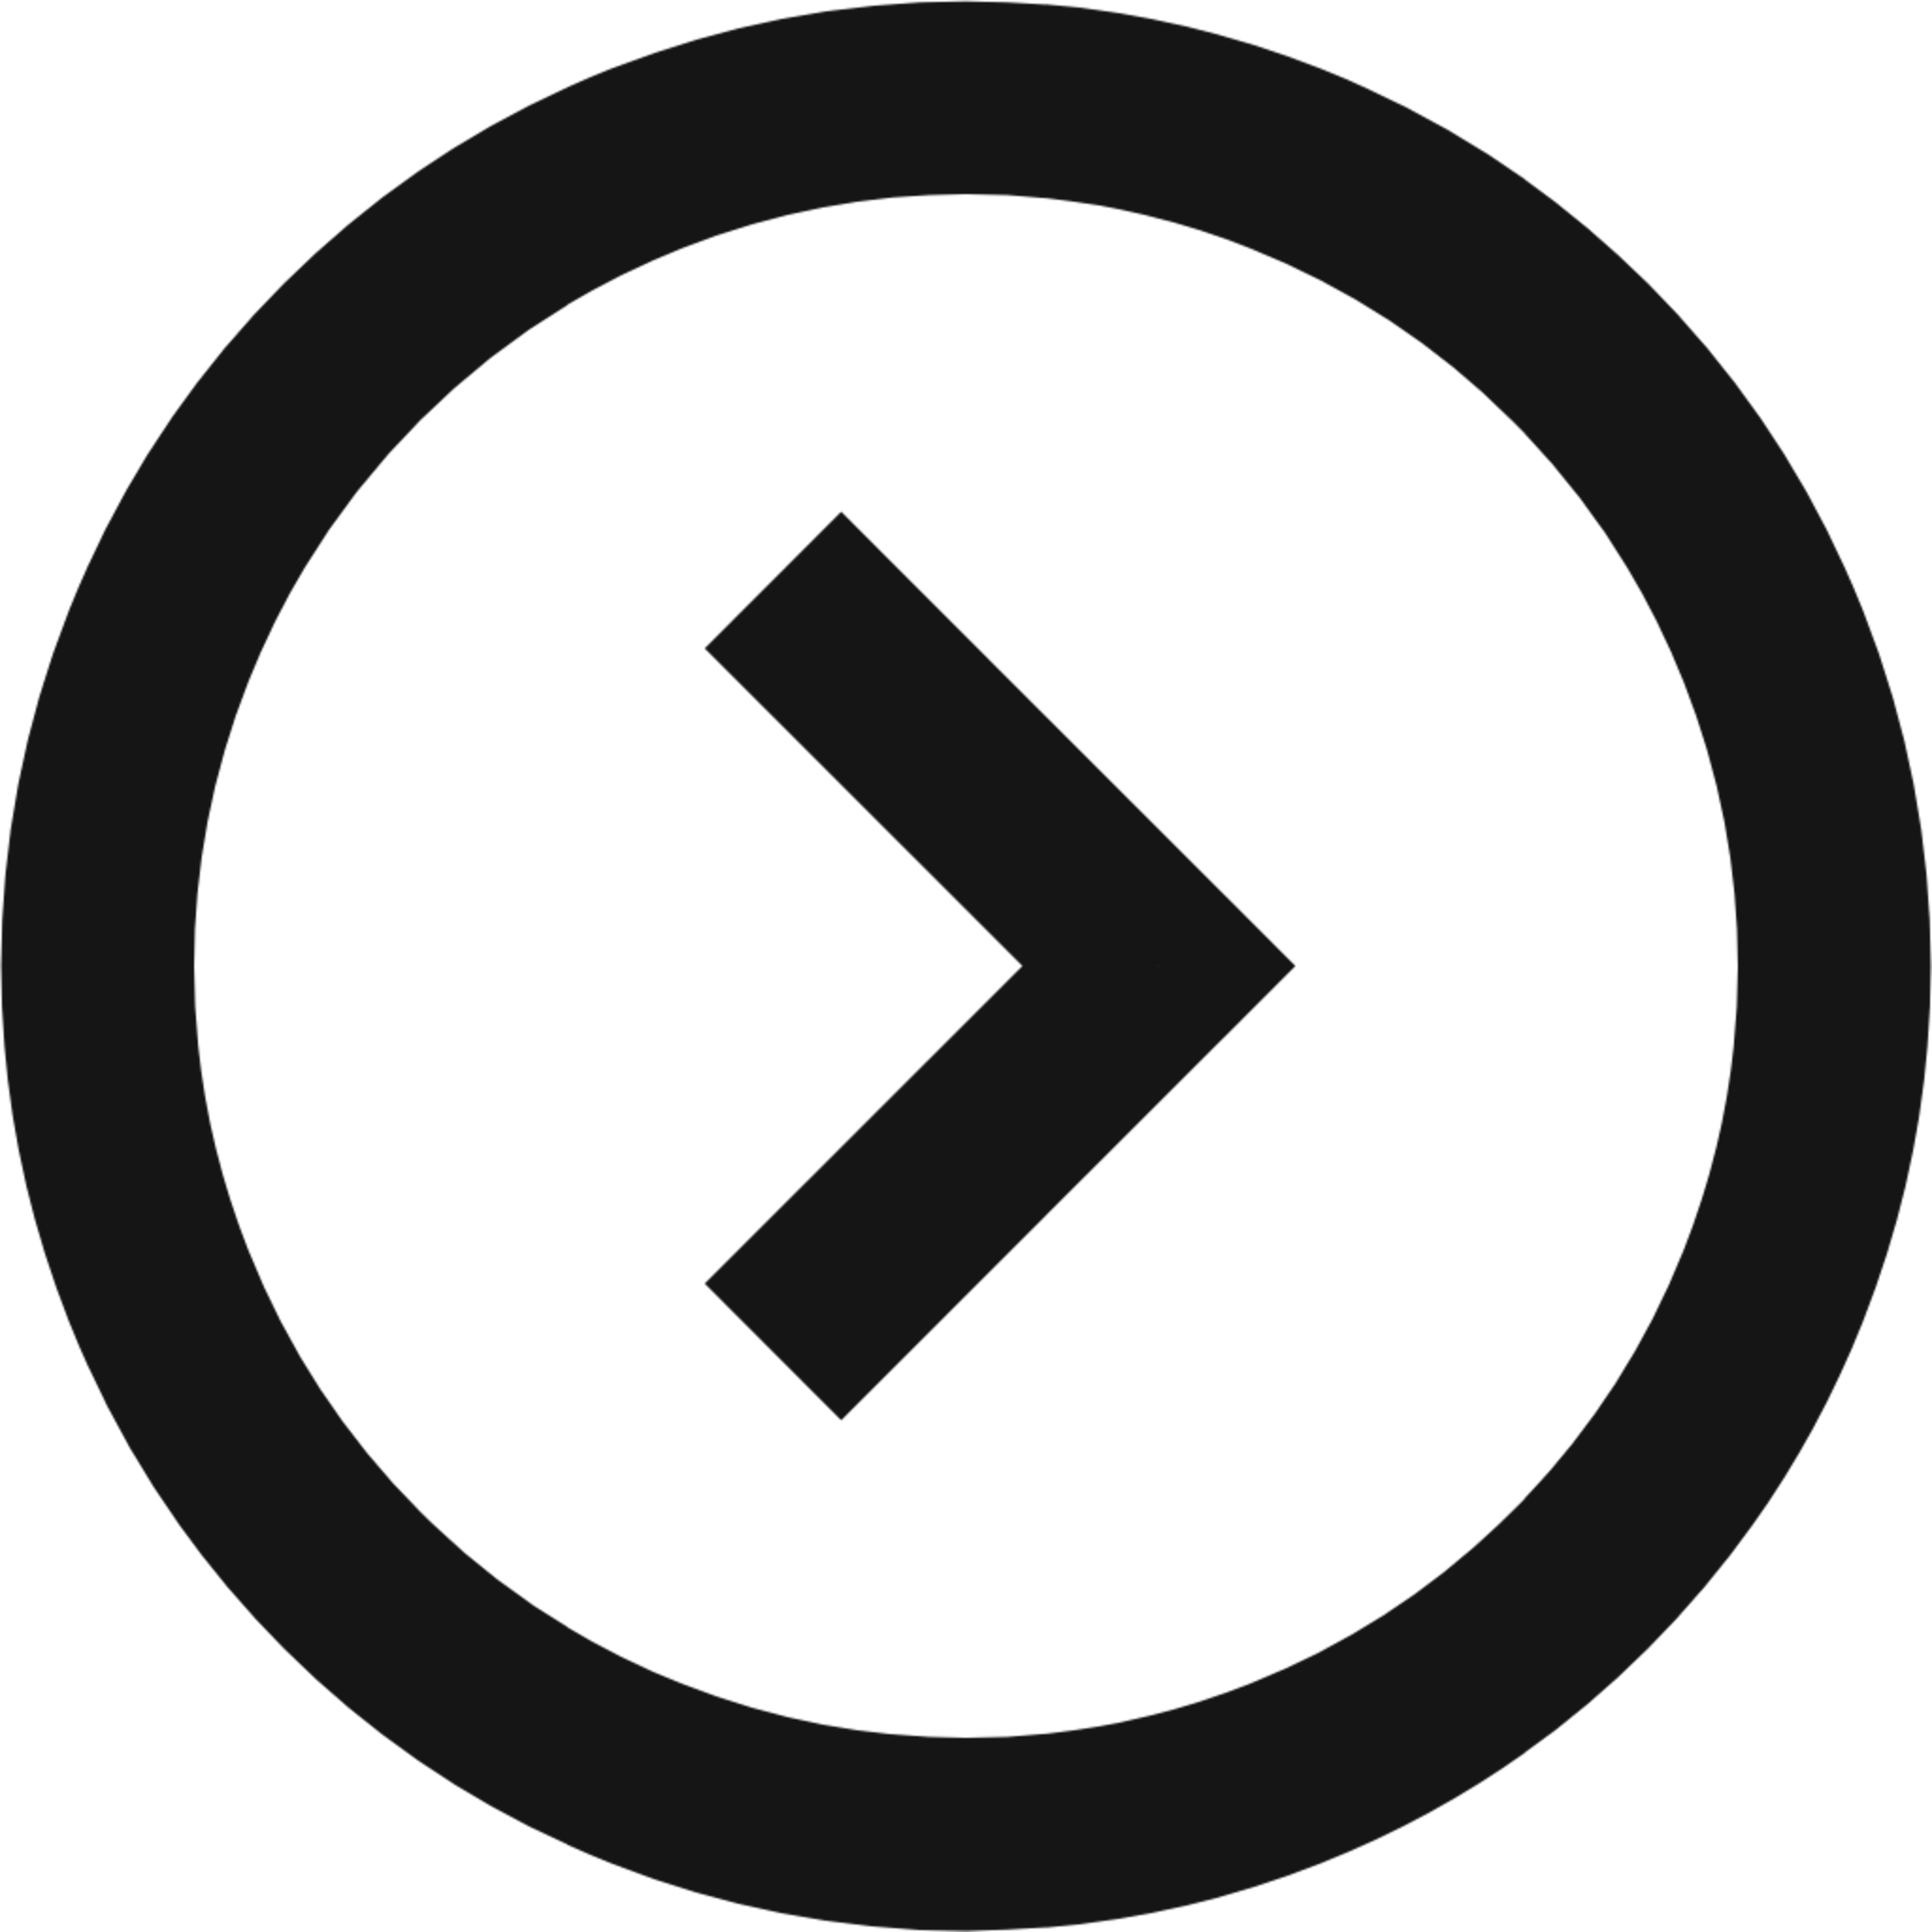 Circle Carret Right icon